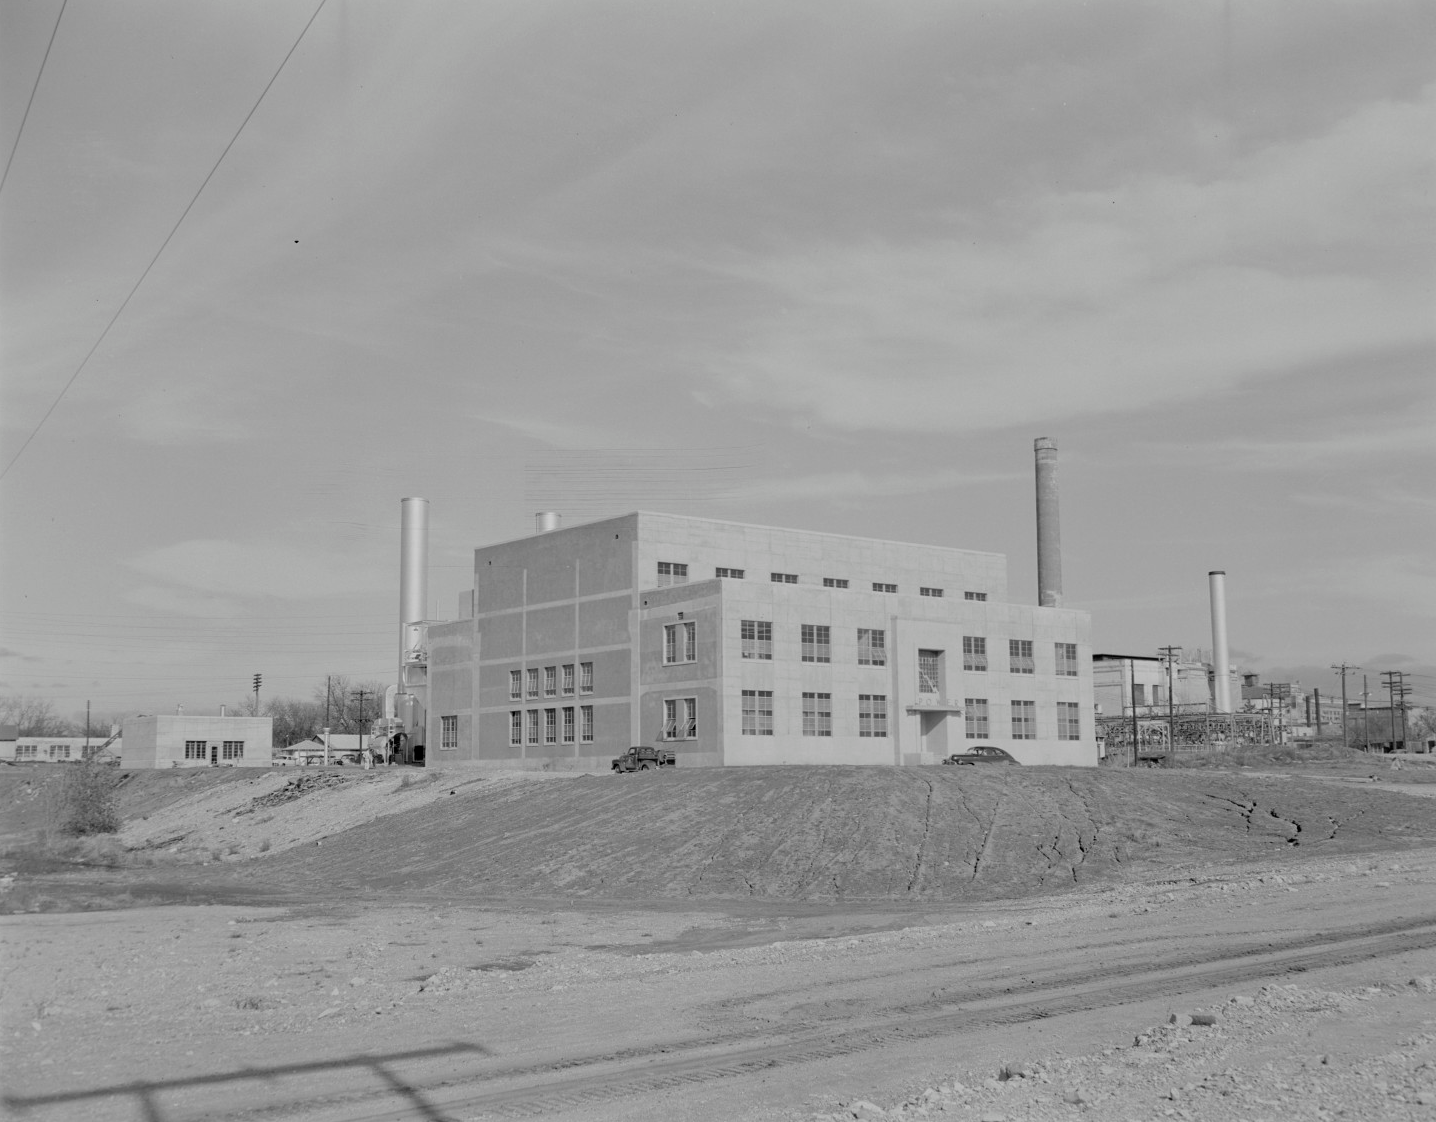 Seaholm Exterior City Power Plant in Austin, Texas, 1951